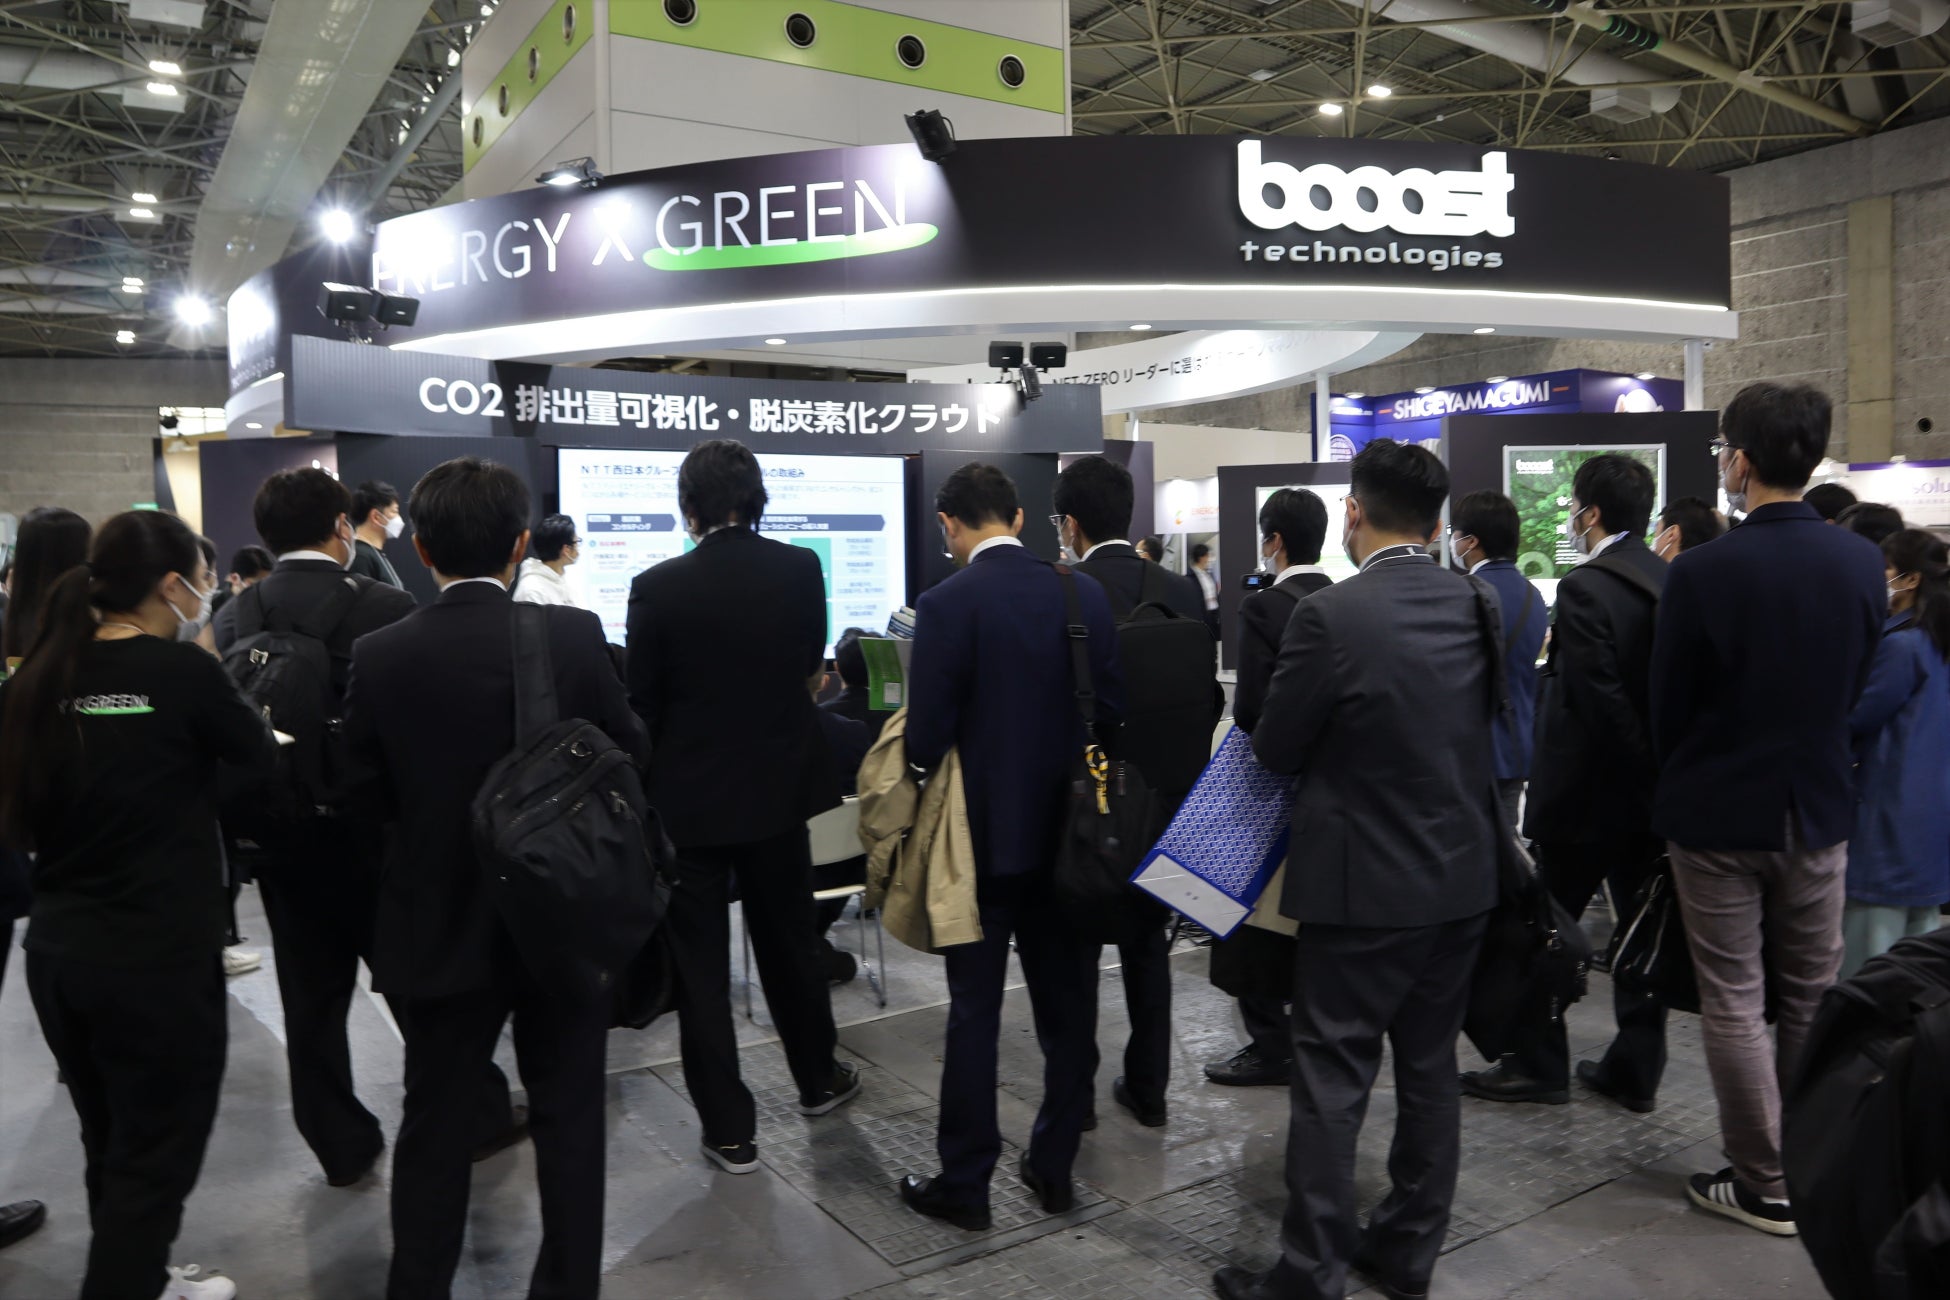 booost technologies、「第2回［関西］脱炭素経営EXPO」に出展し約1,500名が来場のサブ画像1